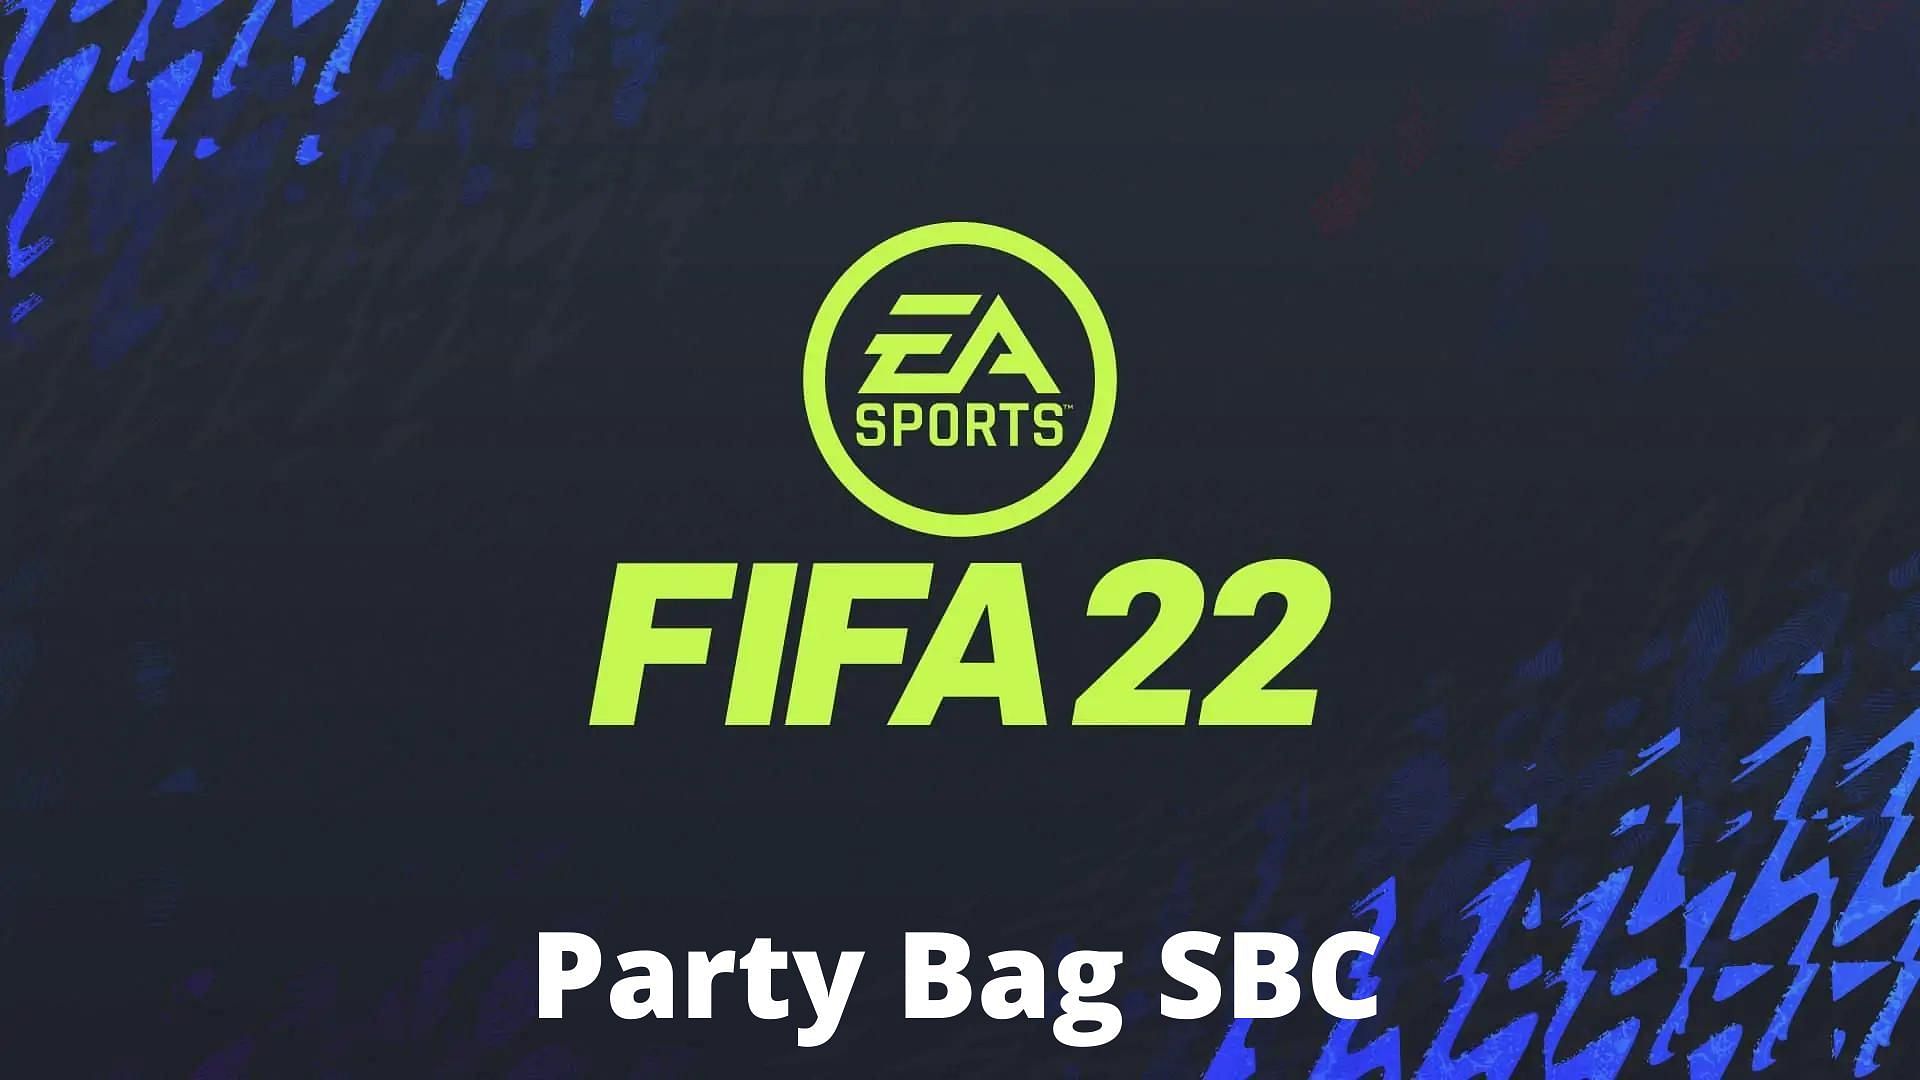 Party Bag SBC is now live in FIFA 22 (Image via Sportskeeda)